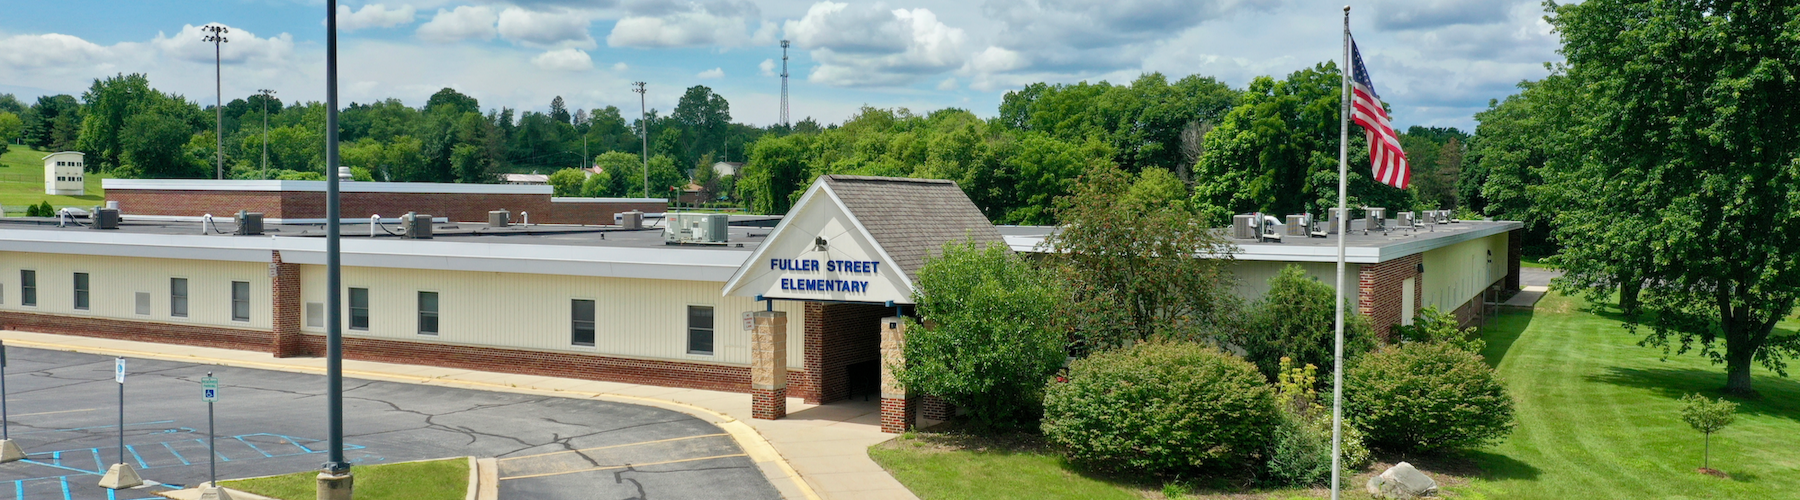 Fuller Street Elementary School - Main Entrance